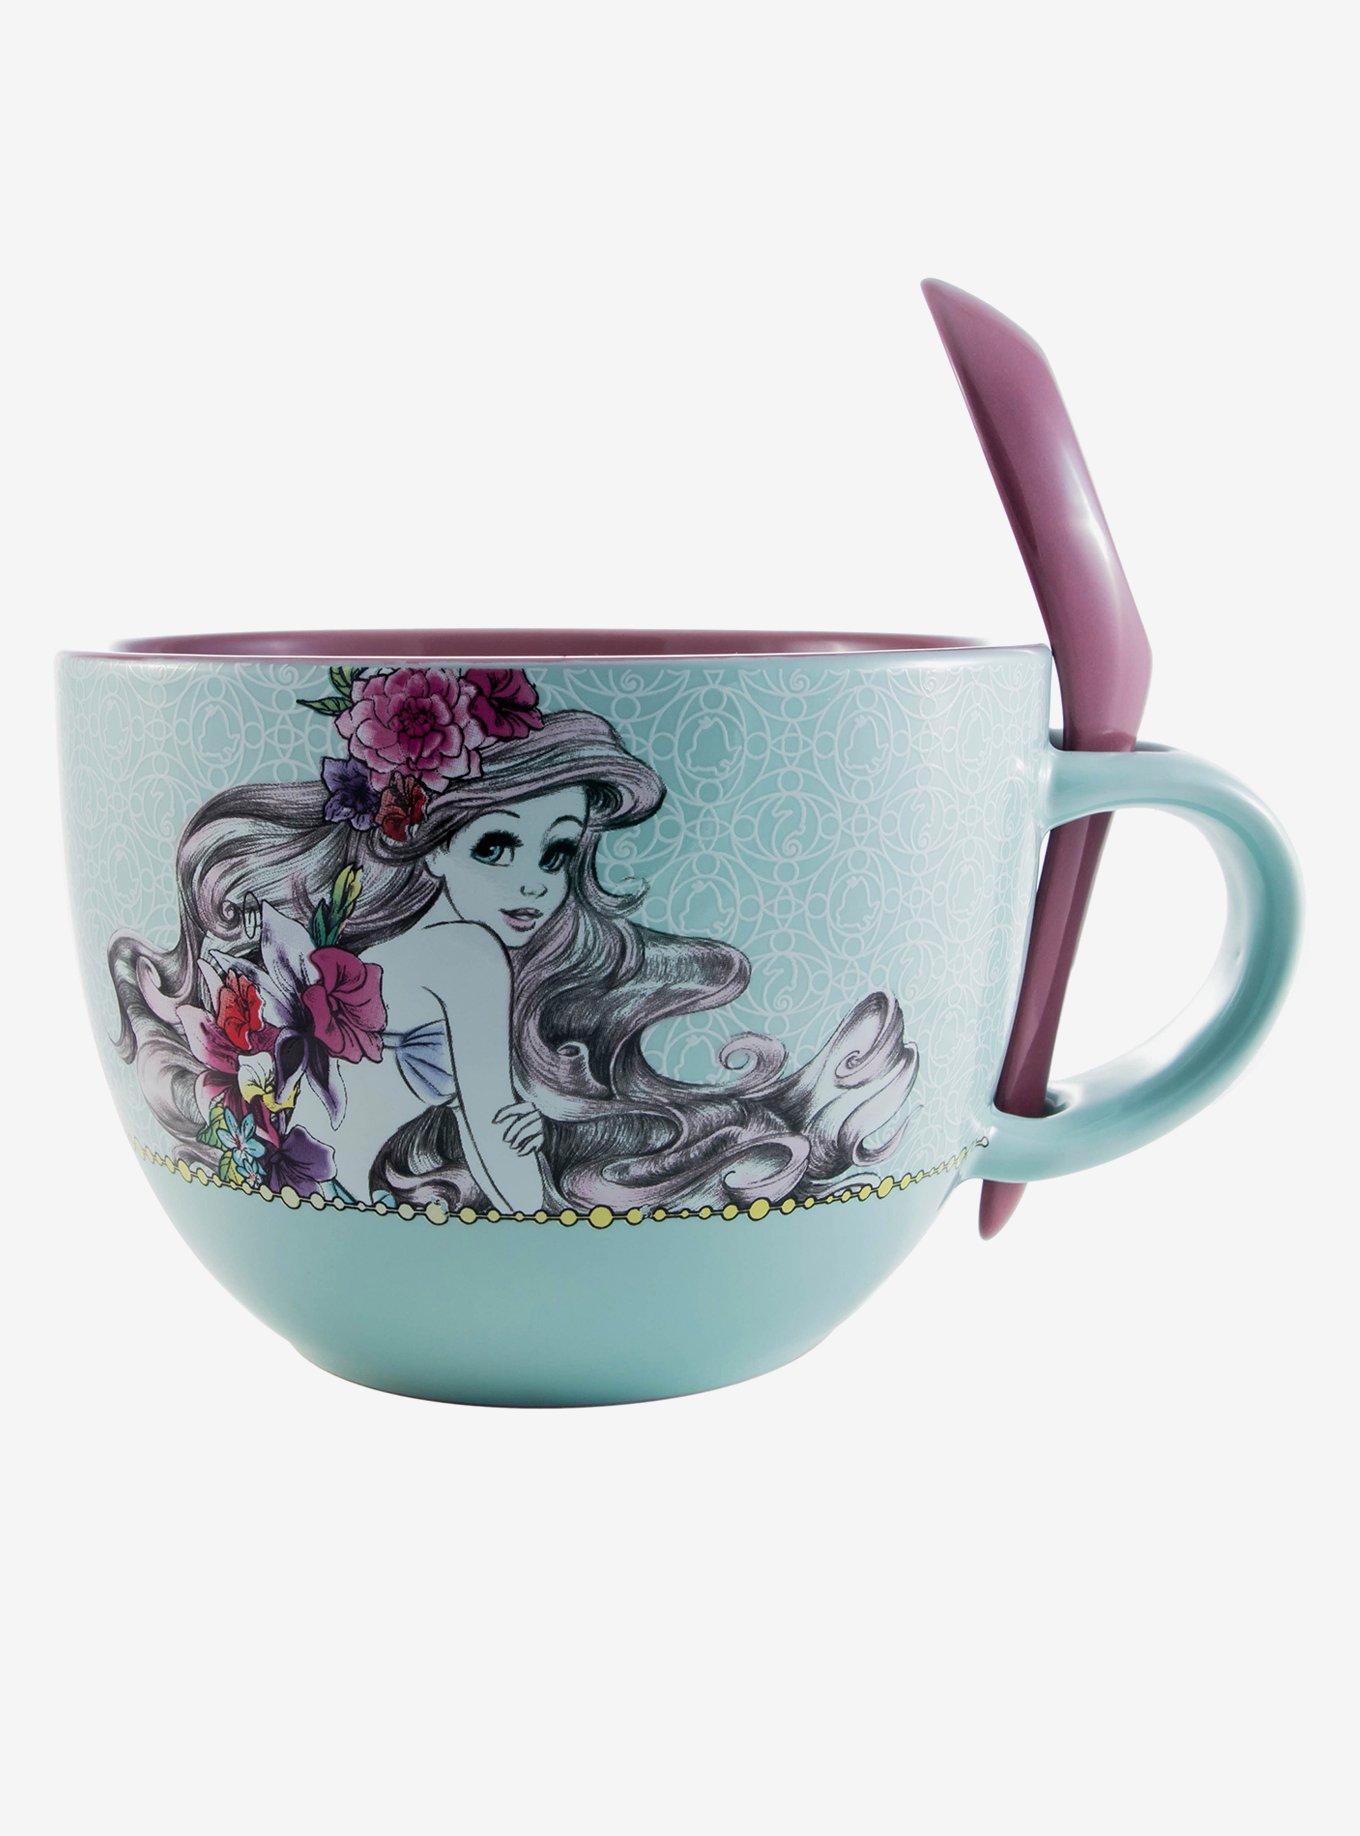 Disney The Little Mermaid Ariel 24-Ounce Ceramic Soup Mug with Spoon